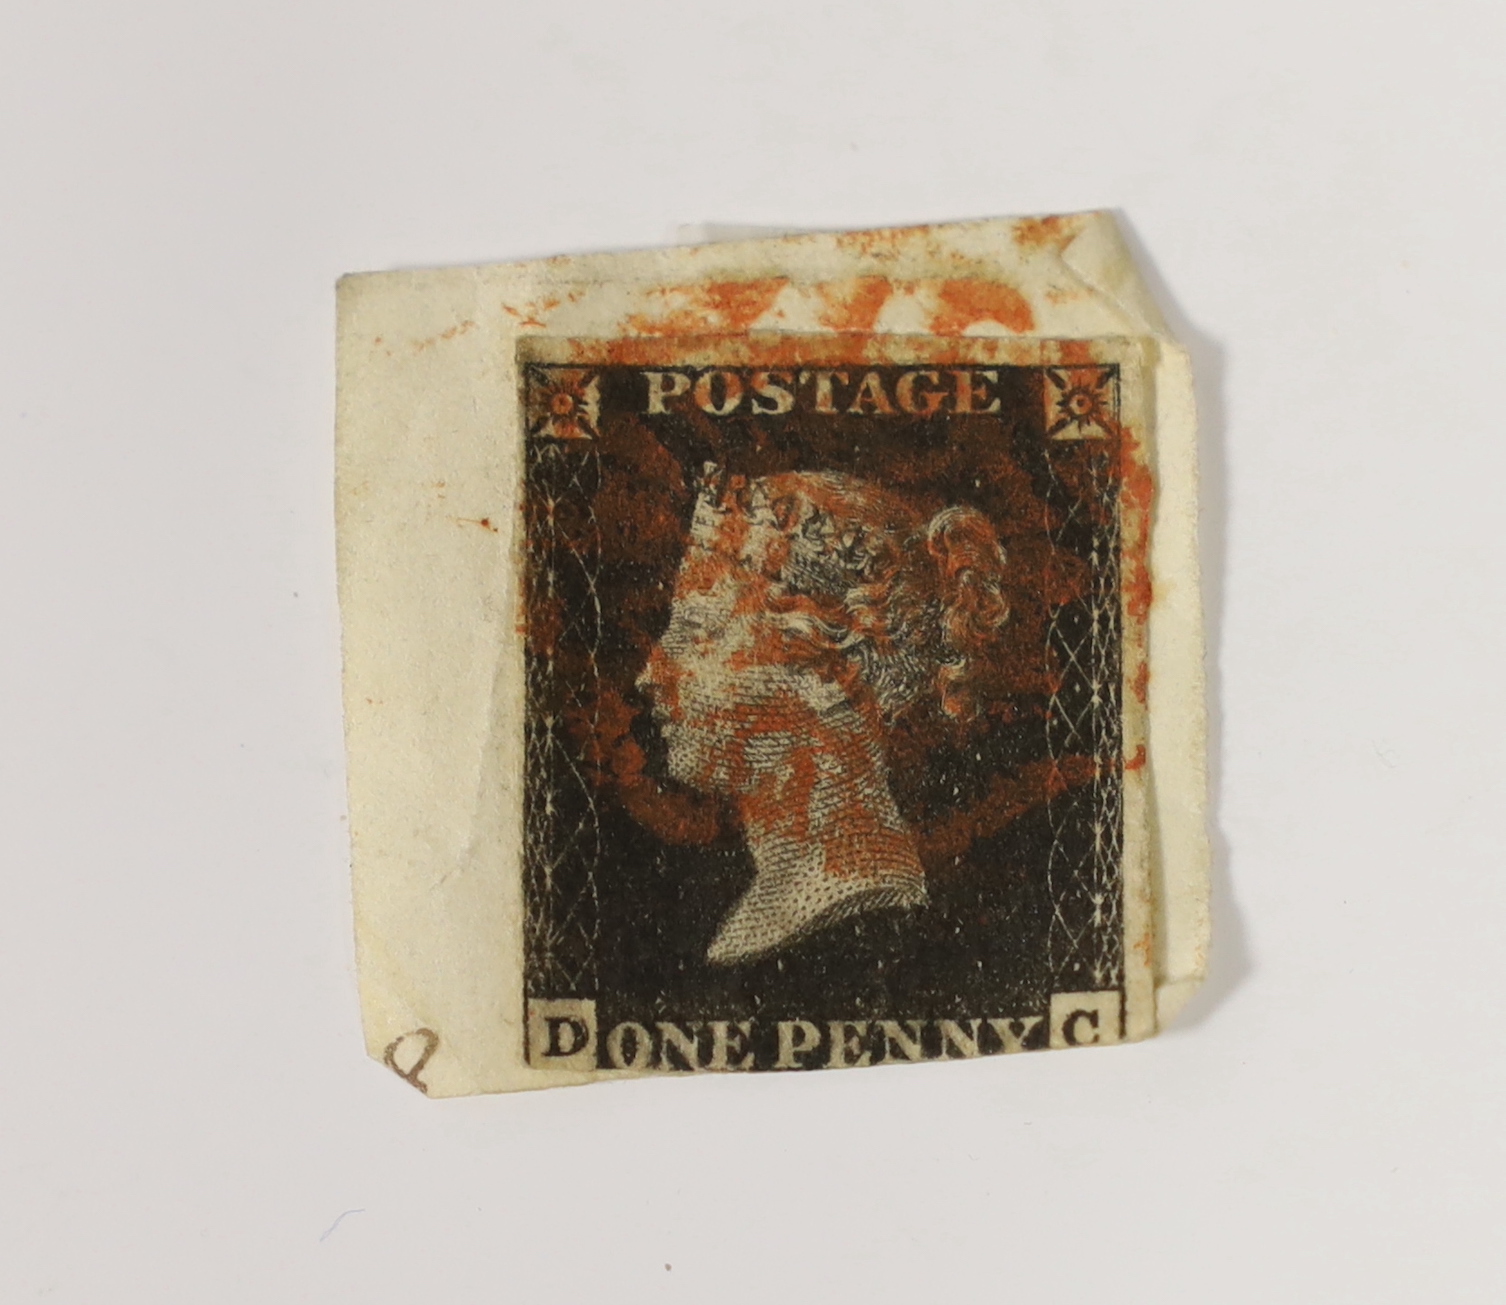 A Penny Black stamp